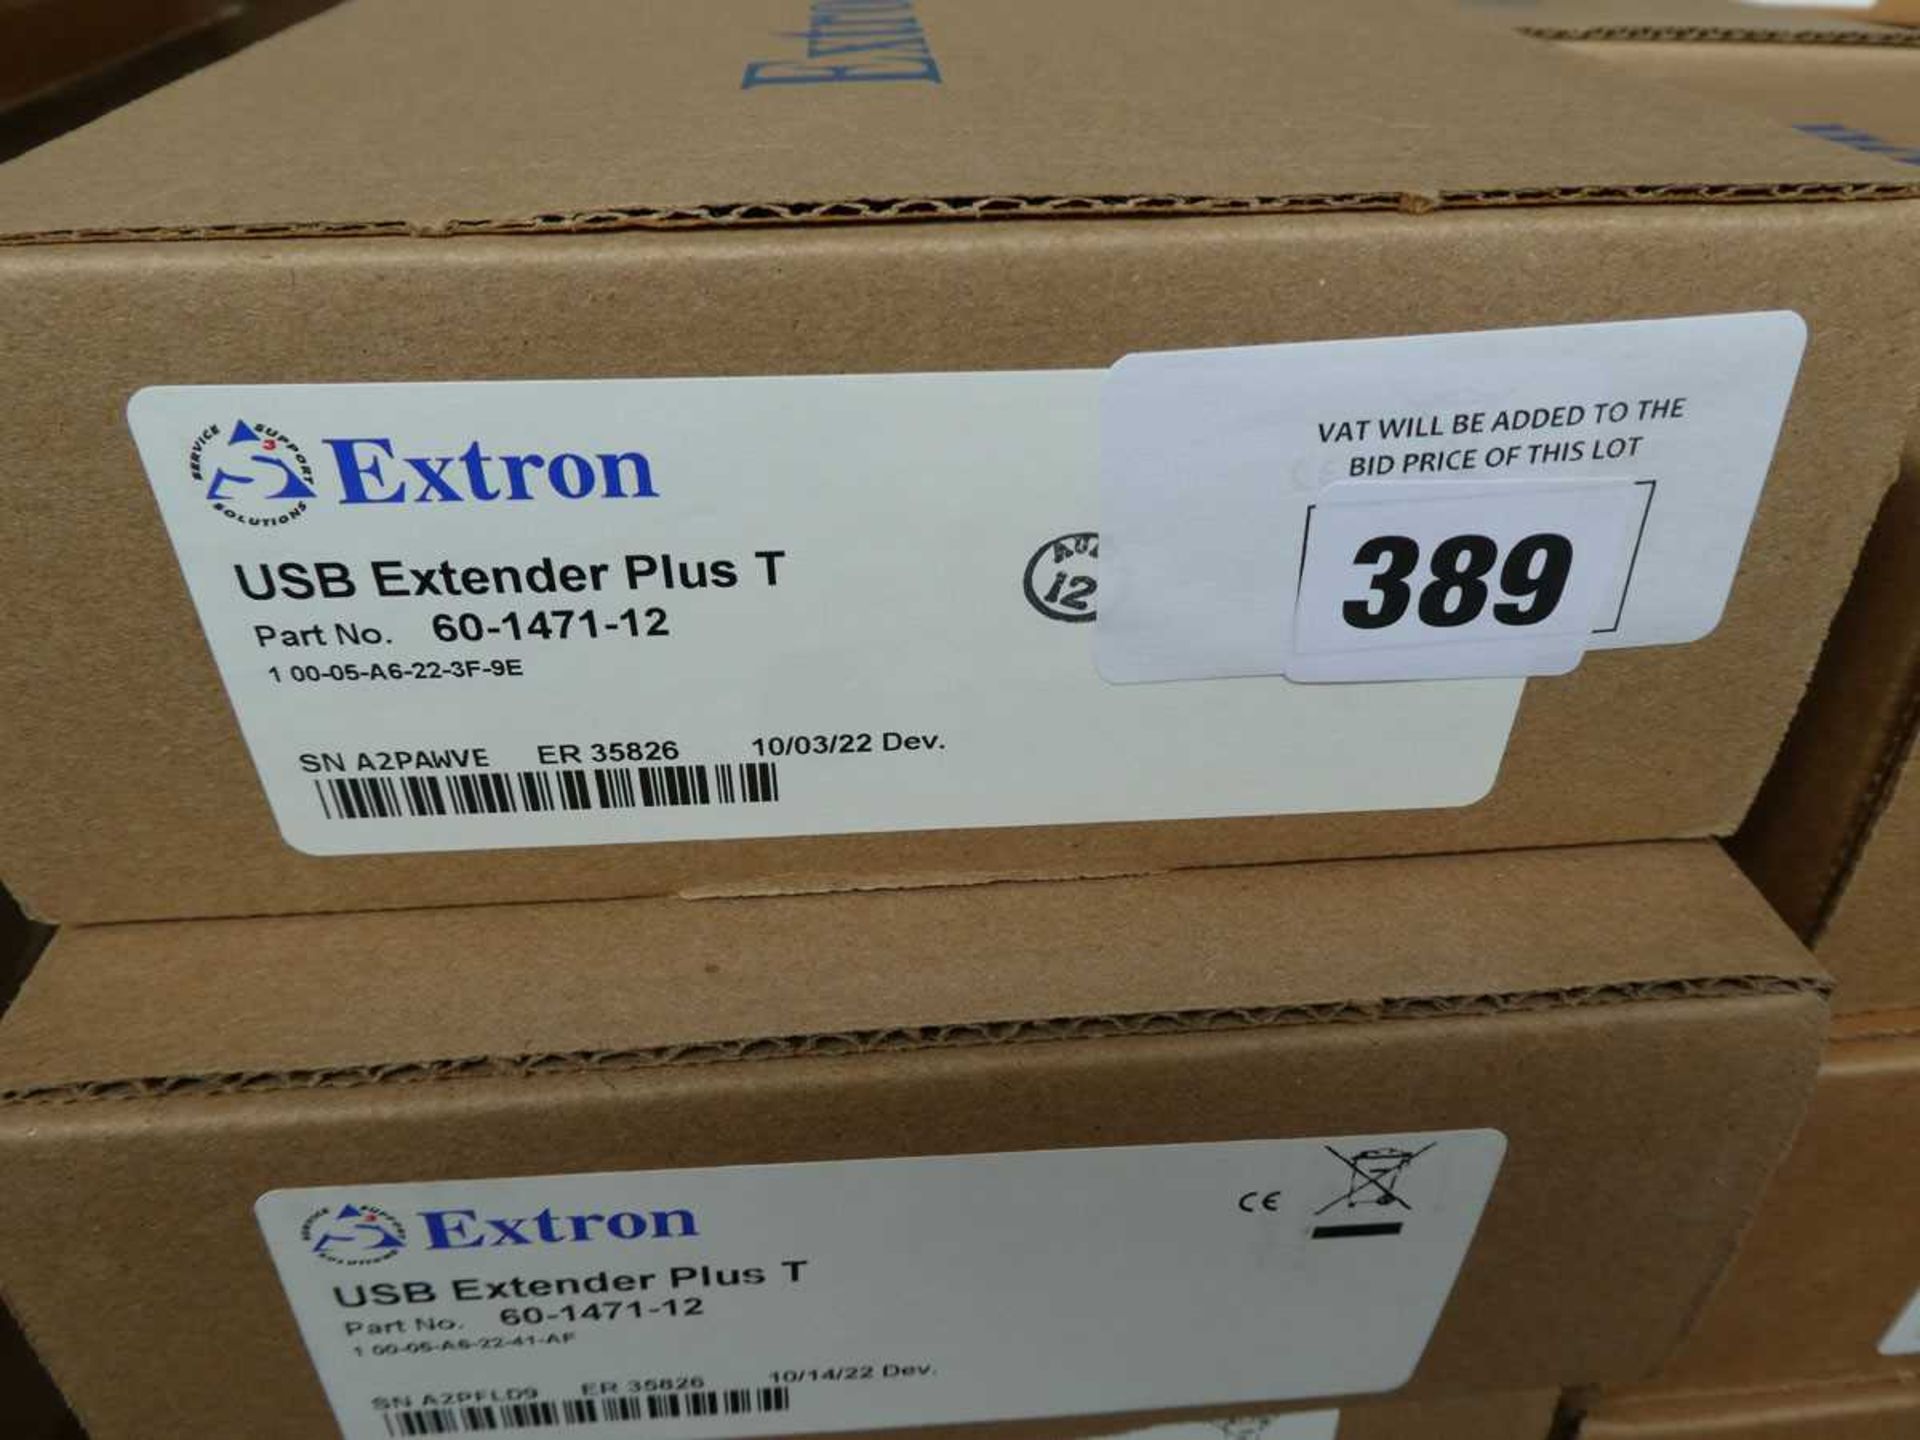 +VAT 21 Extron USB Extender Plus T transmitters